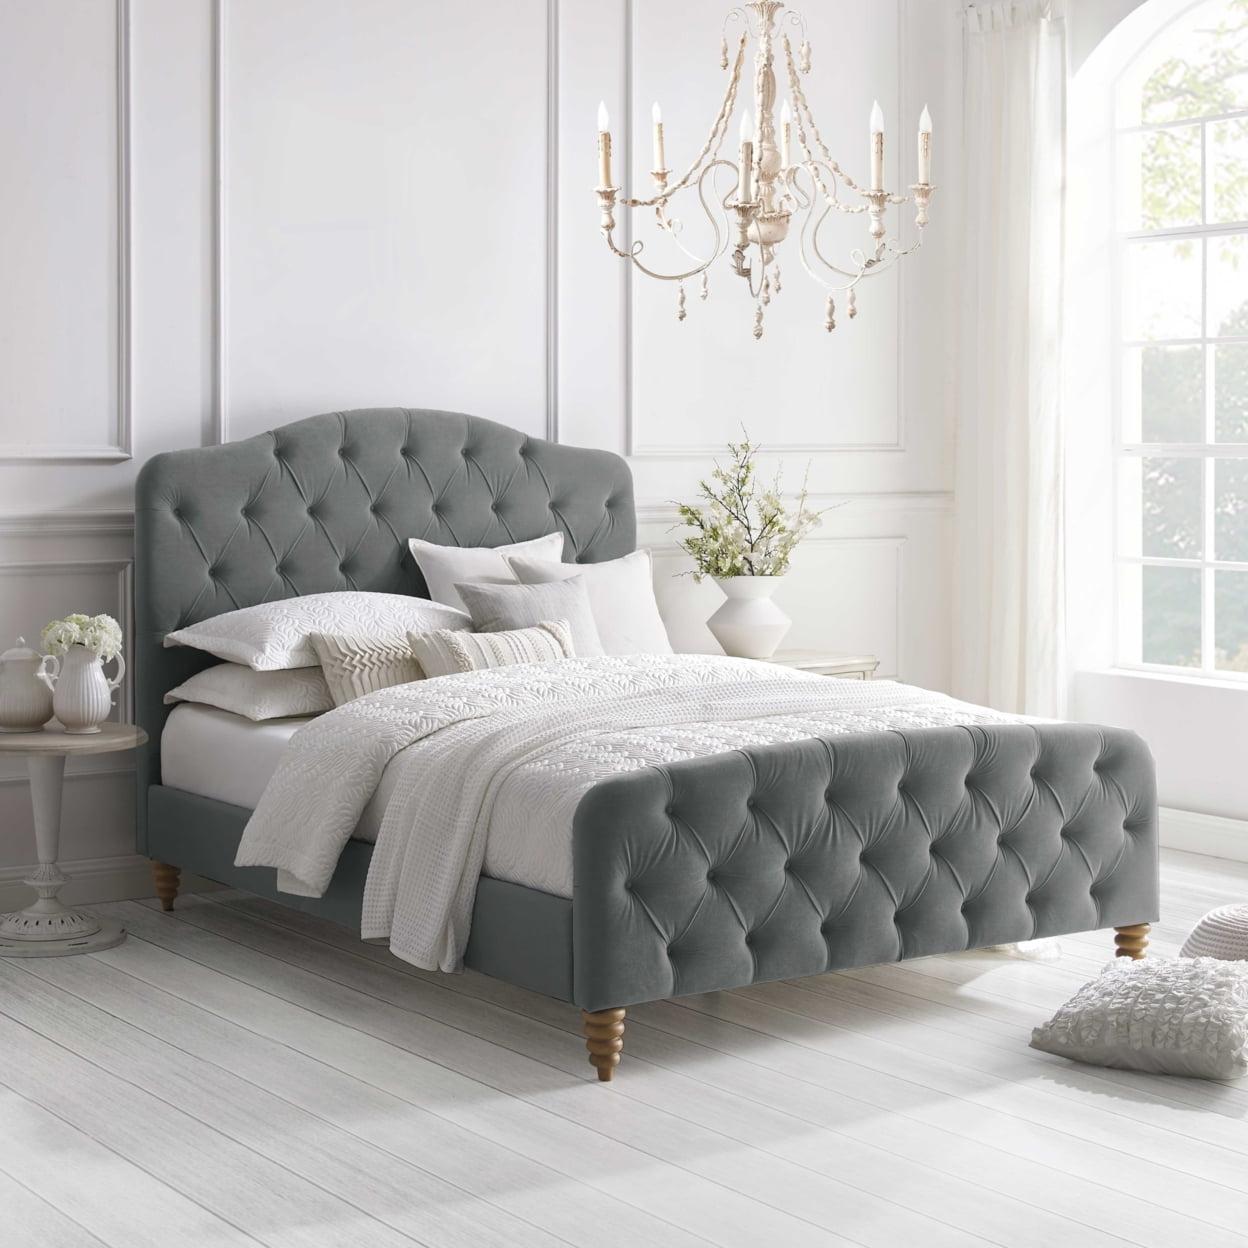 Elegant Velvet Queen Bed with Diamond Tufted Headboard in Gray